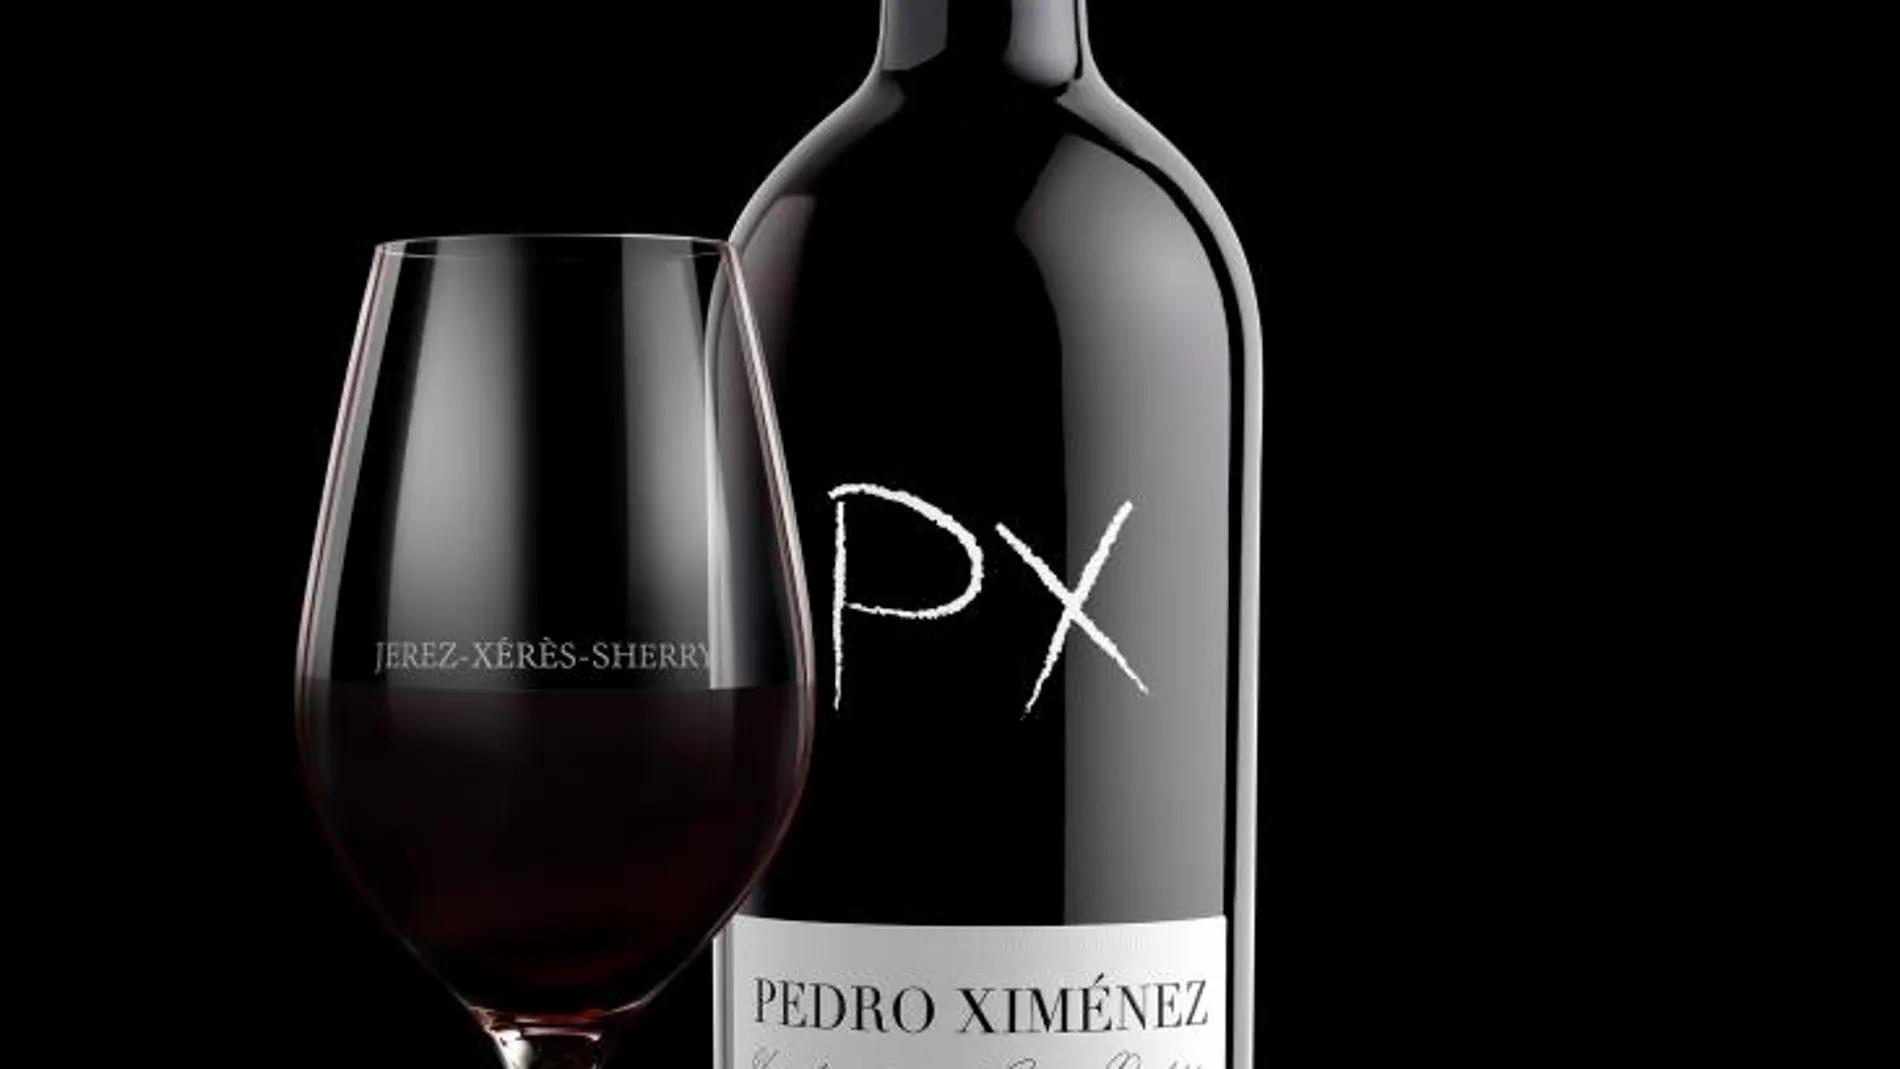 Botella de Pedro Ximénez / Foto de la pagina web de vinos de Jérez